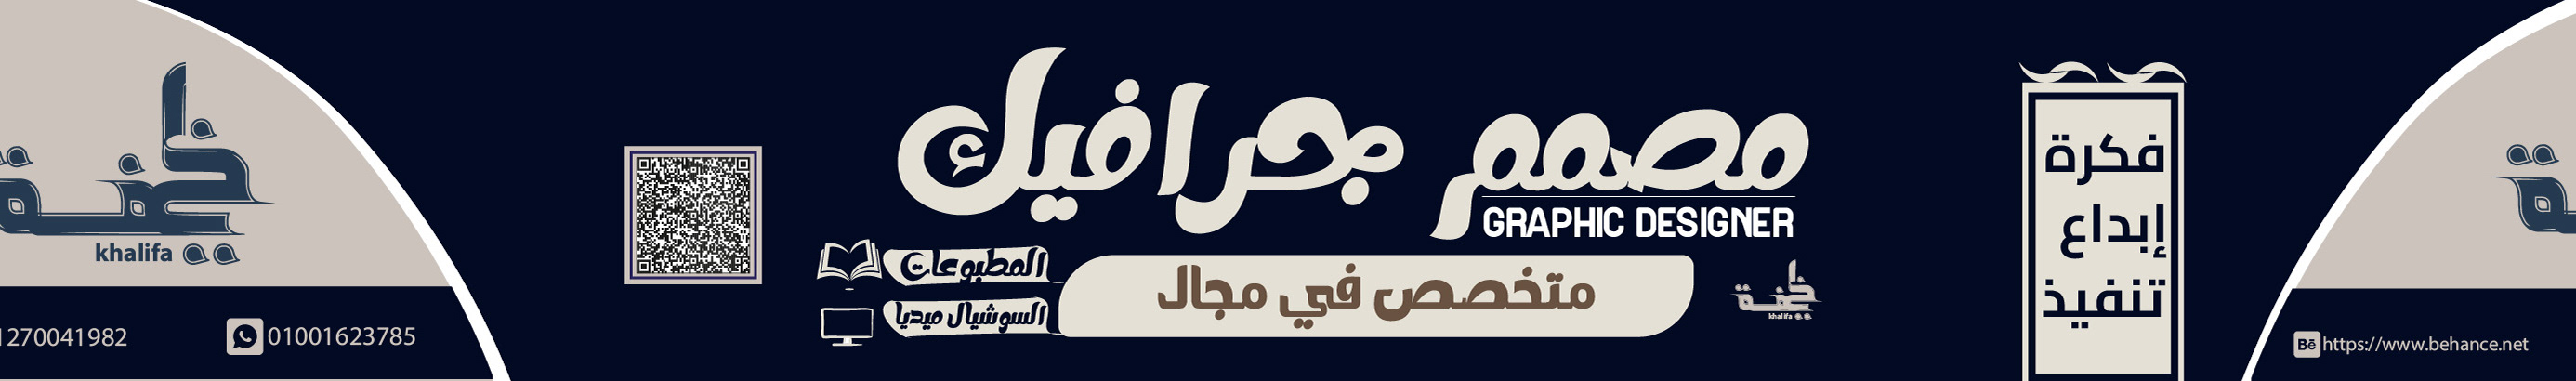 ahmed khalifa's profile banner